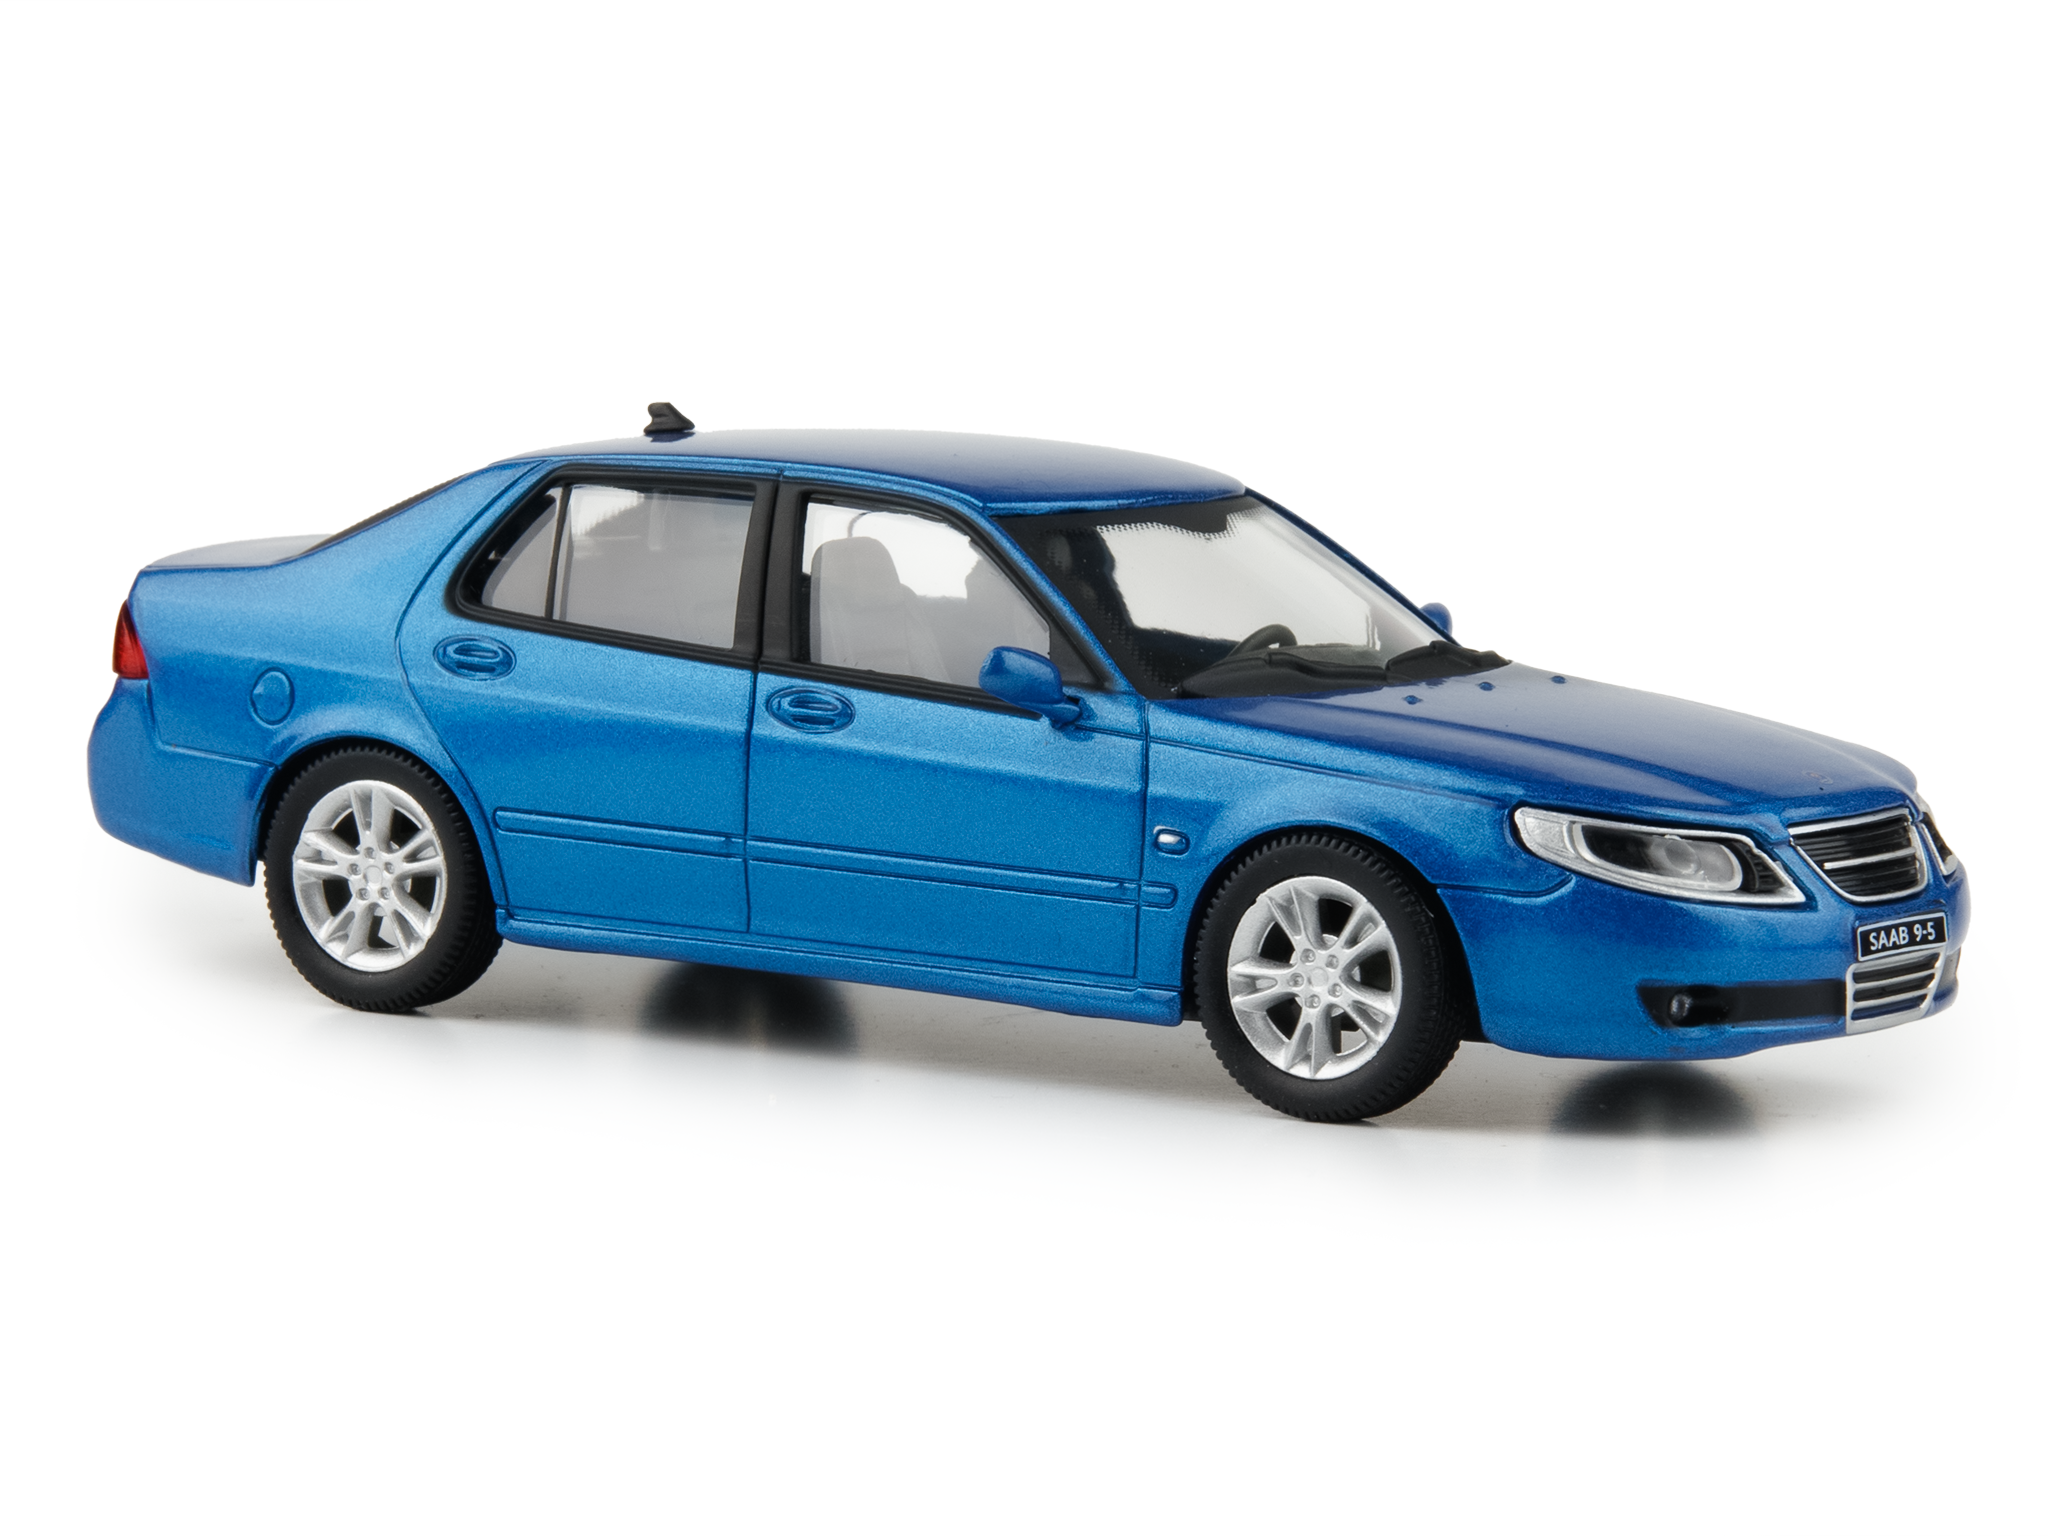 Saab 9.5 1998 blue- 1:43 Scale Diecast Model Car